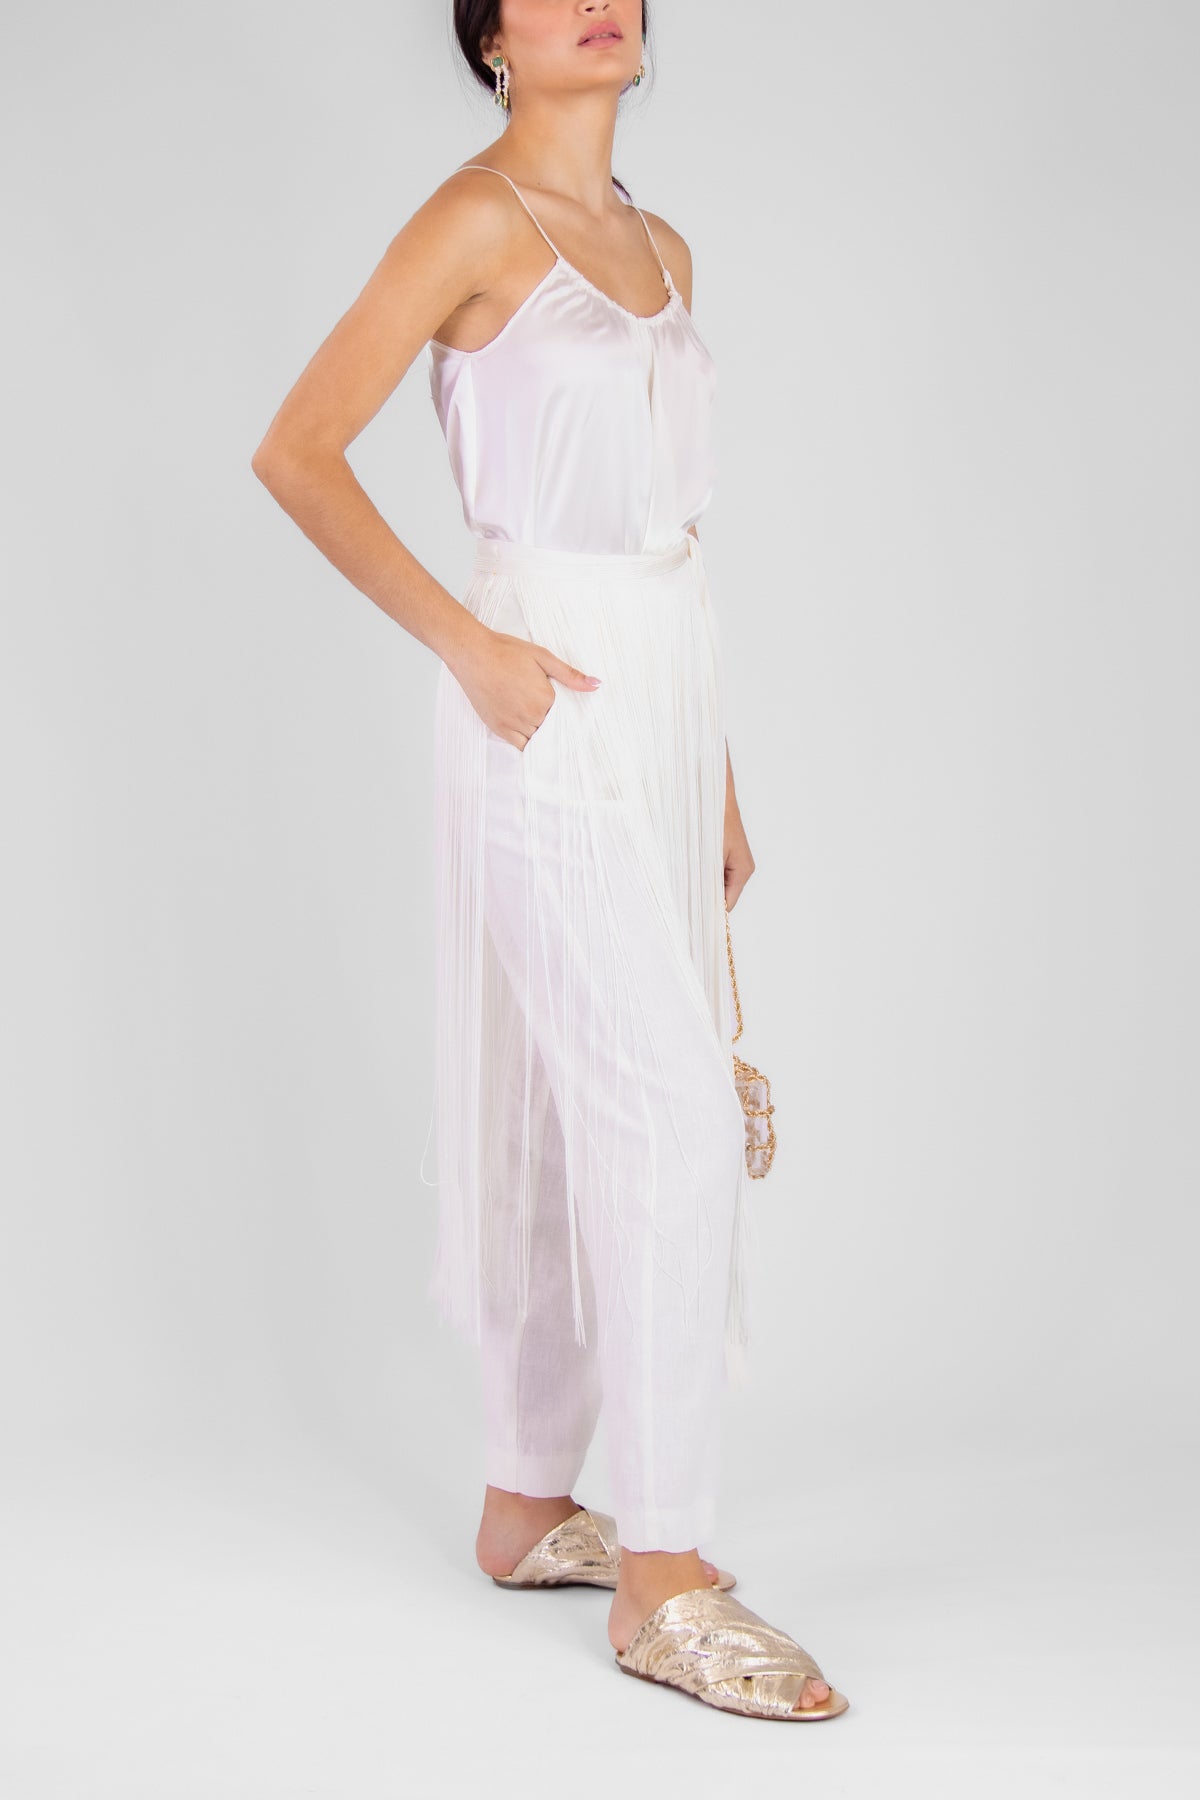 Chic Linen Cavas High Waist Pants in White - shop-olivia.com